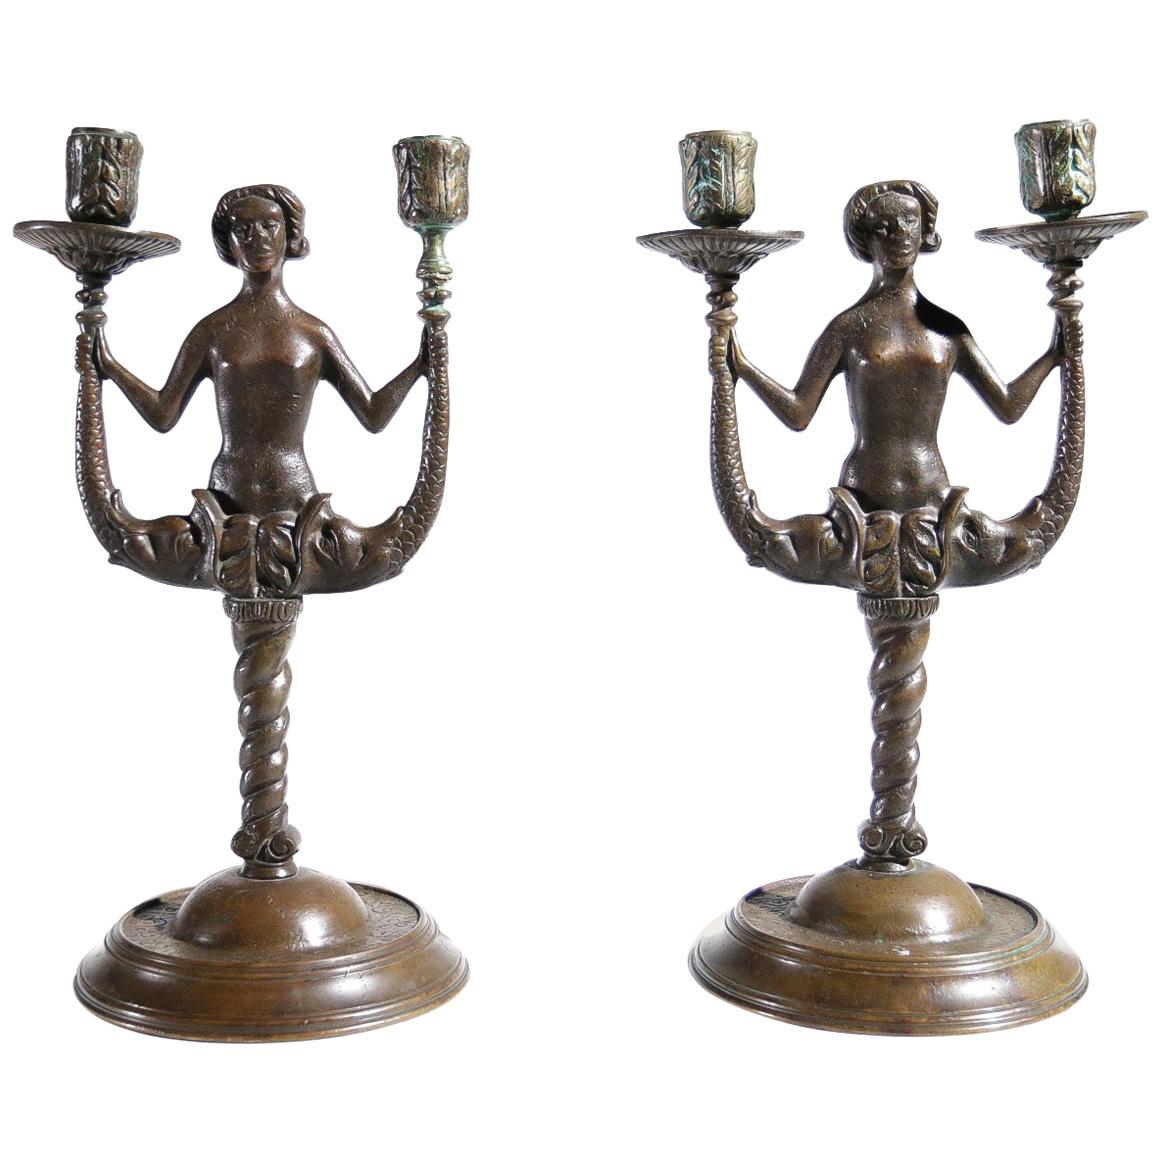 Antique bronze candlestick